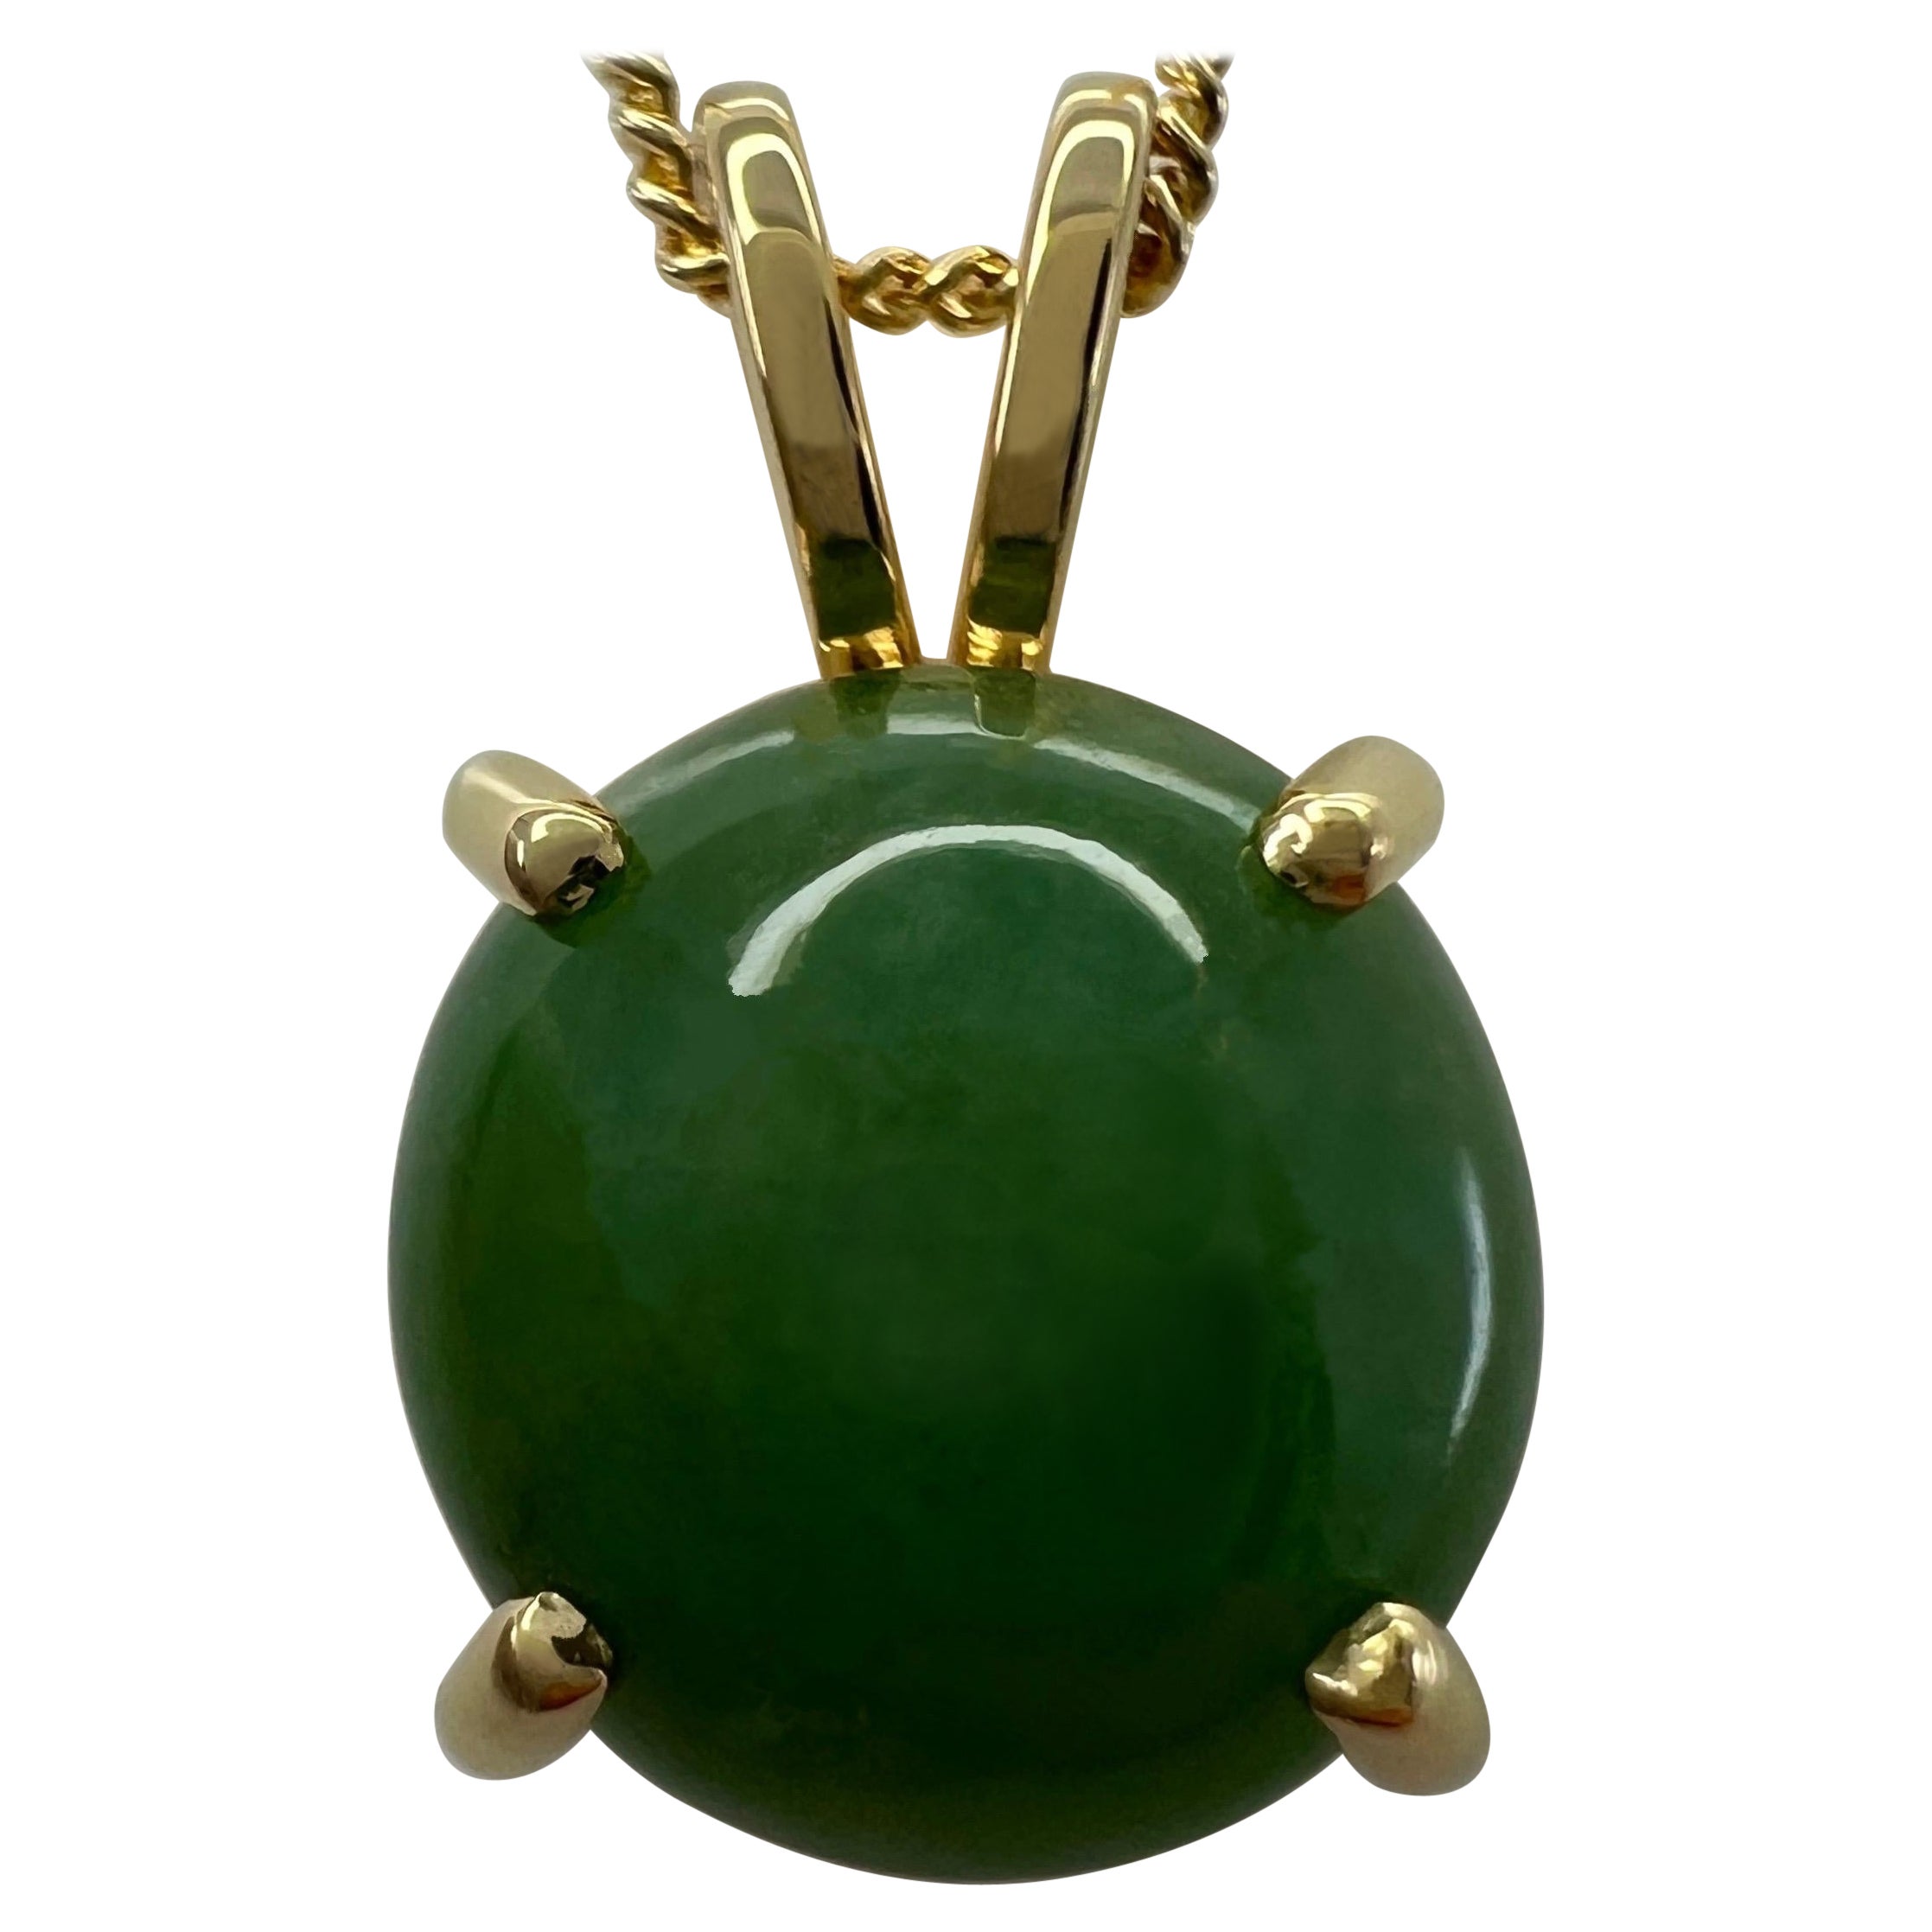 Certified 3.70 Carat Jadeite A-Grade Jade Fine Green Untreated 18k Gold Pendant